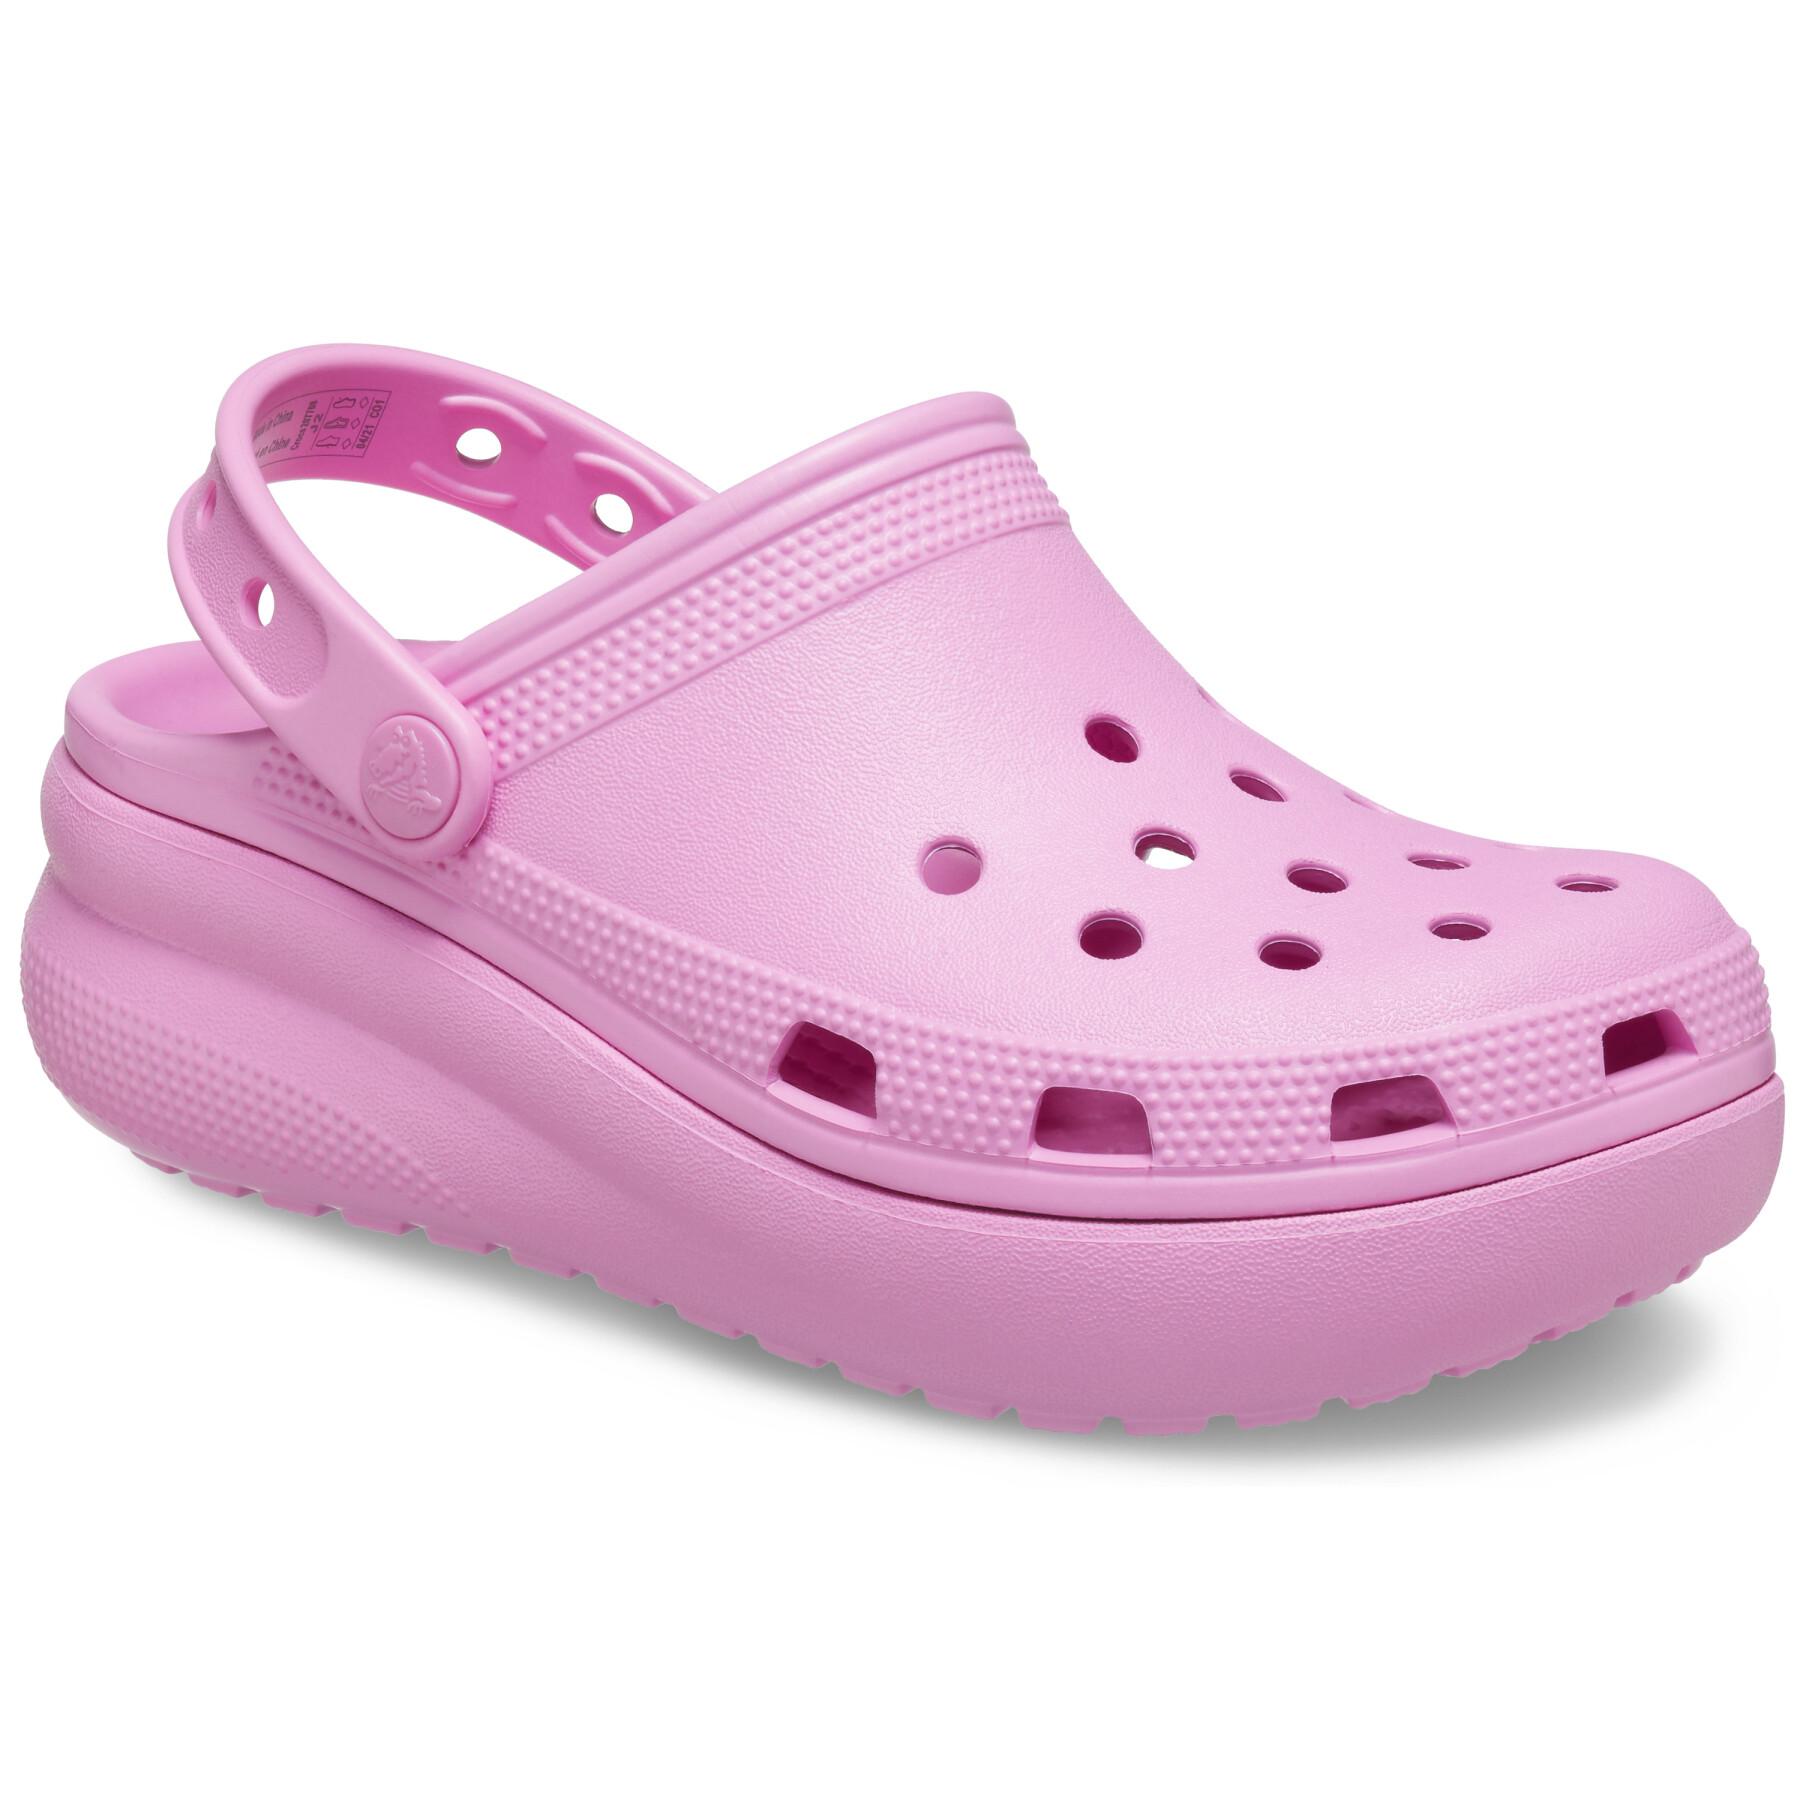 Children's clogs Crocs Classic Cutie